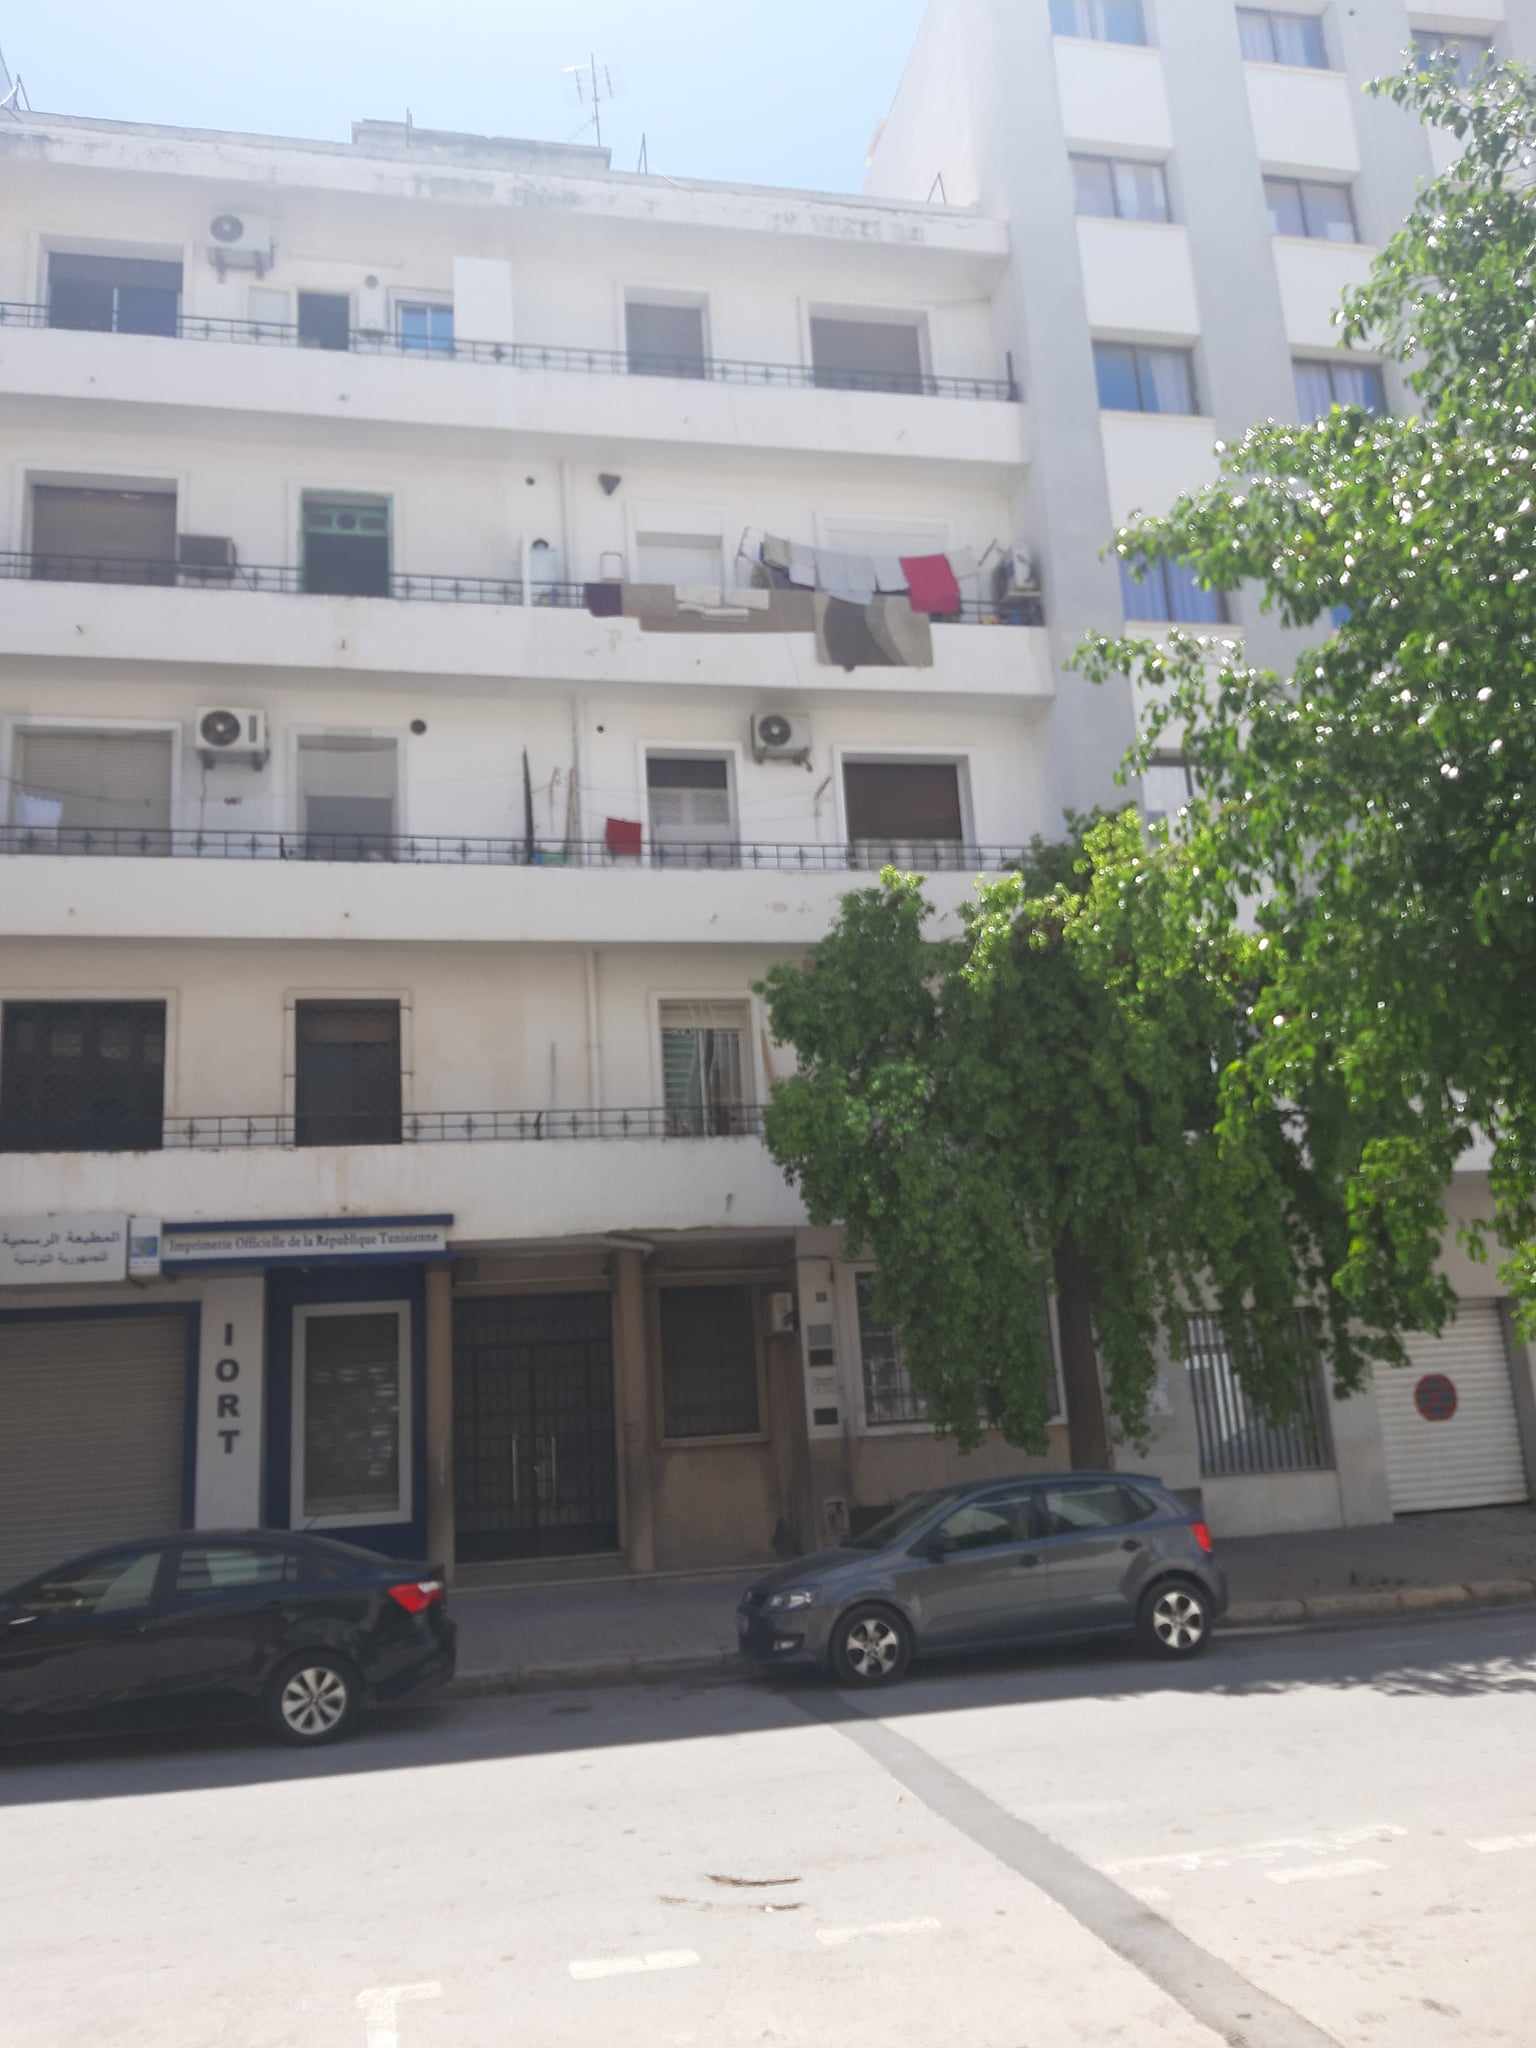 Tunisie Bab Bhar Hedi Chaker Vente Appart. 2 pièces Appartement à lafayette